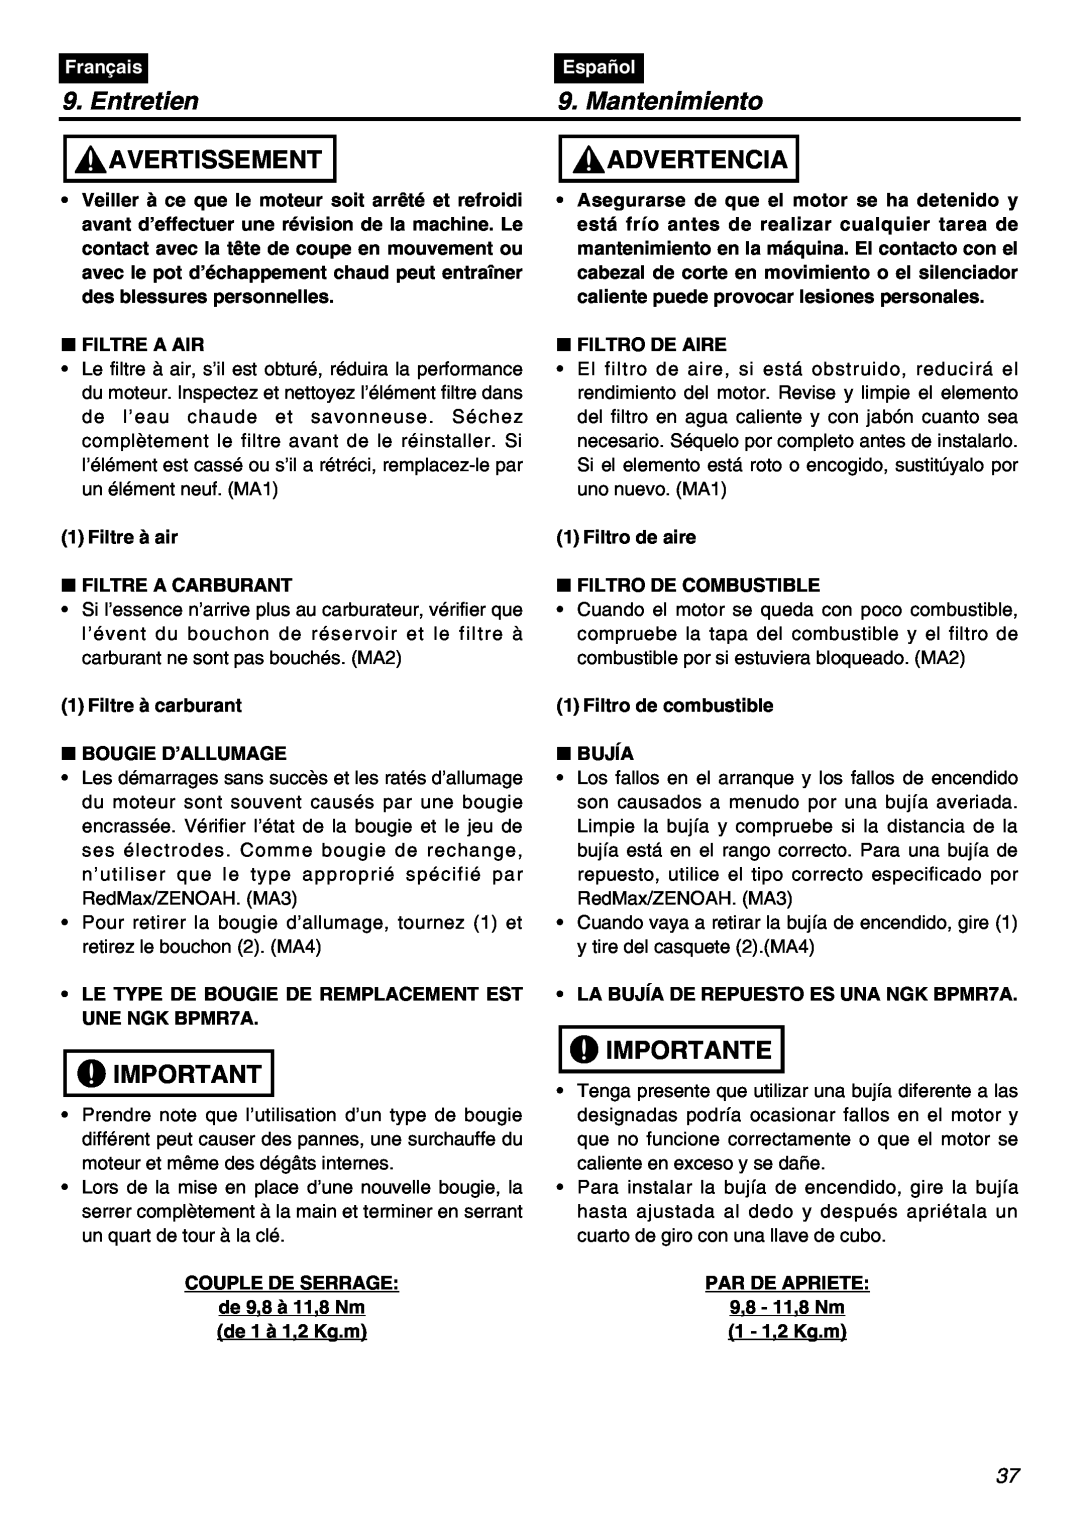 Zenoah BT250 manual Entretien, Mantenimiento, Avertissement, Advertencia, Importante, Français, Español 